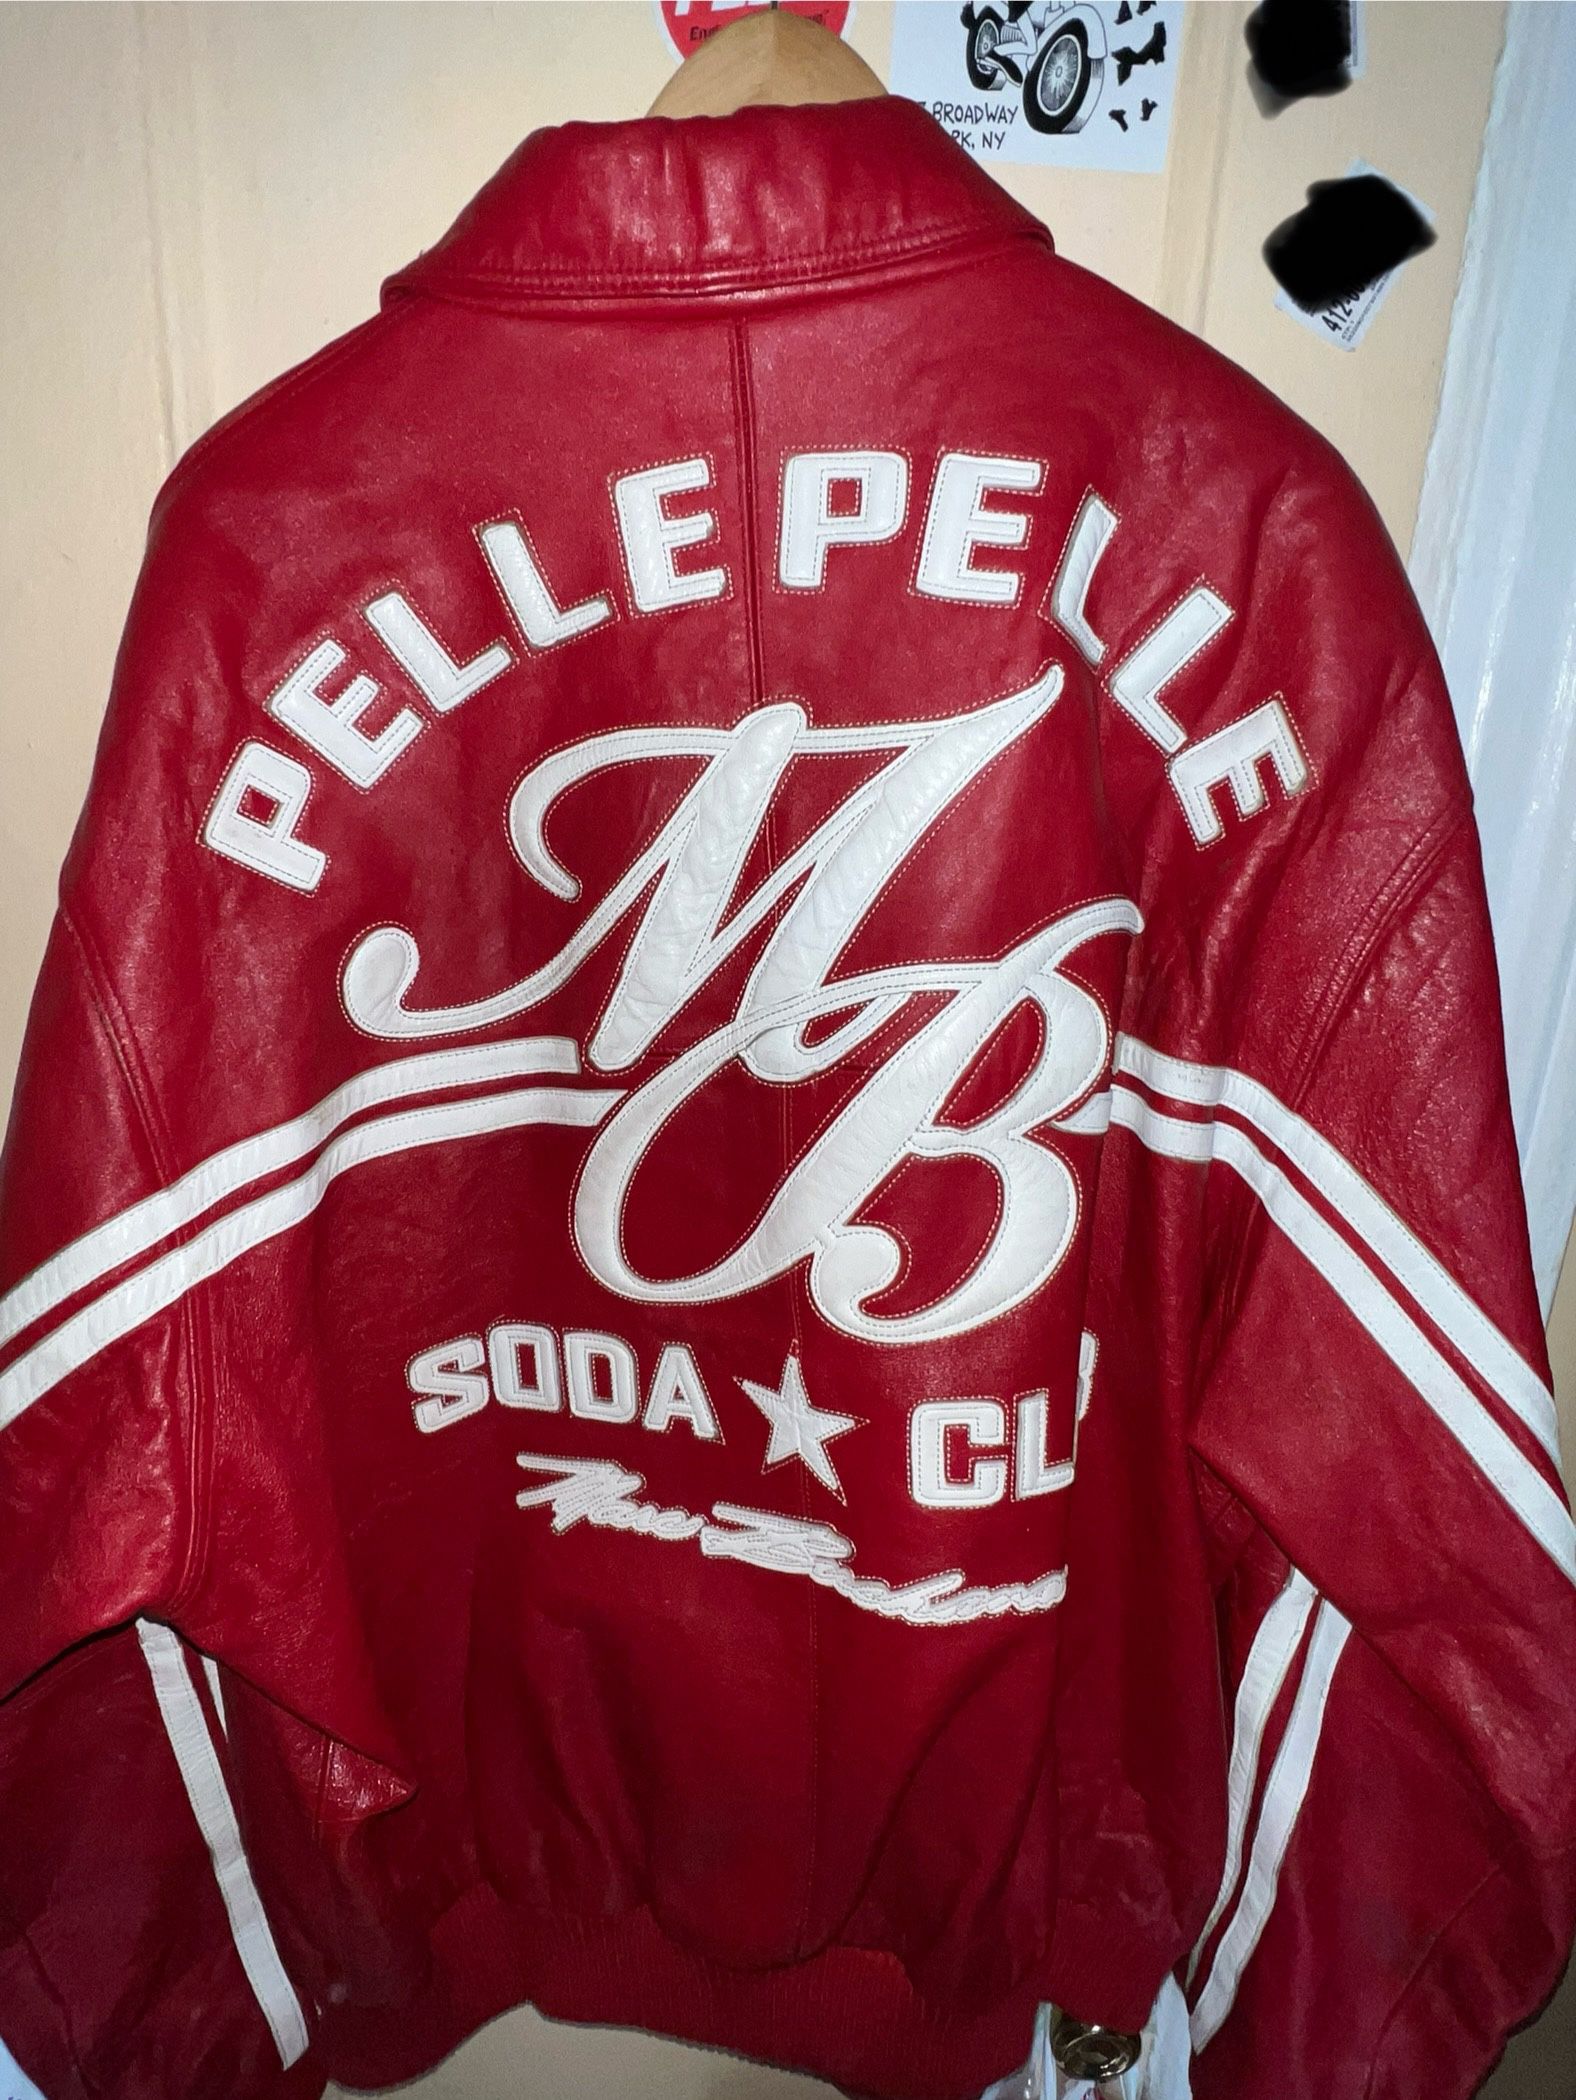 Pelle Pelle Soda Club Leather Jacket 